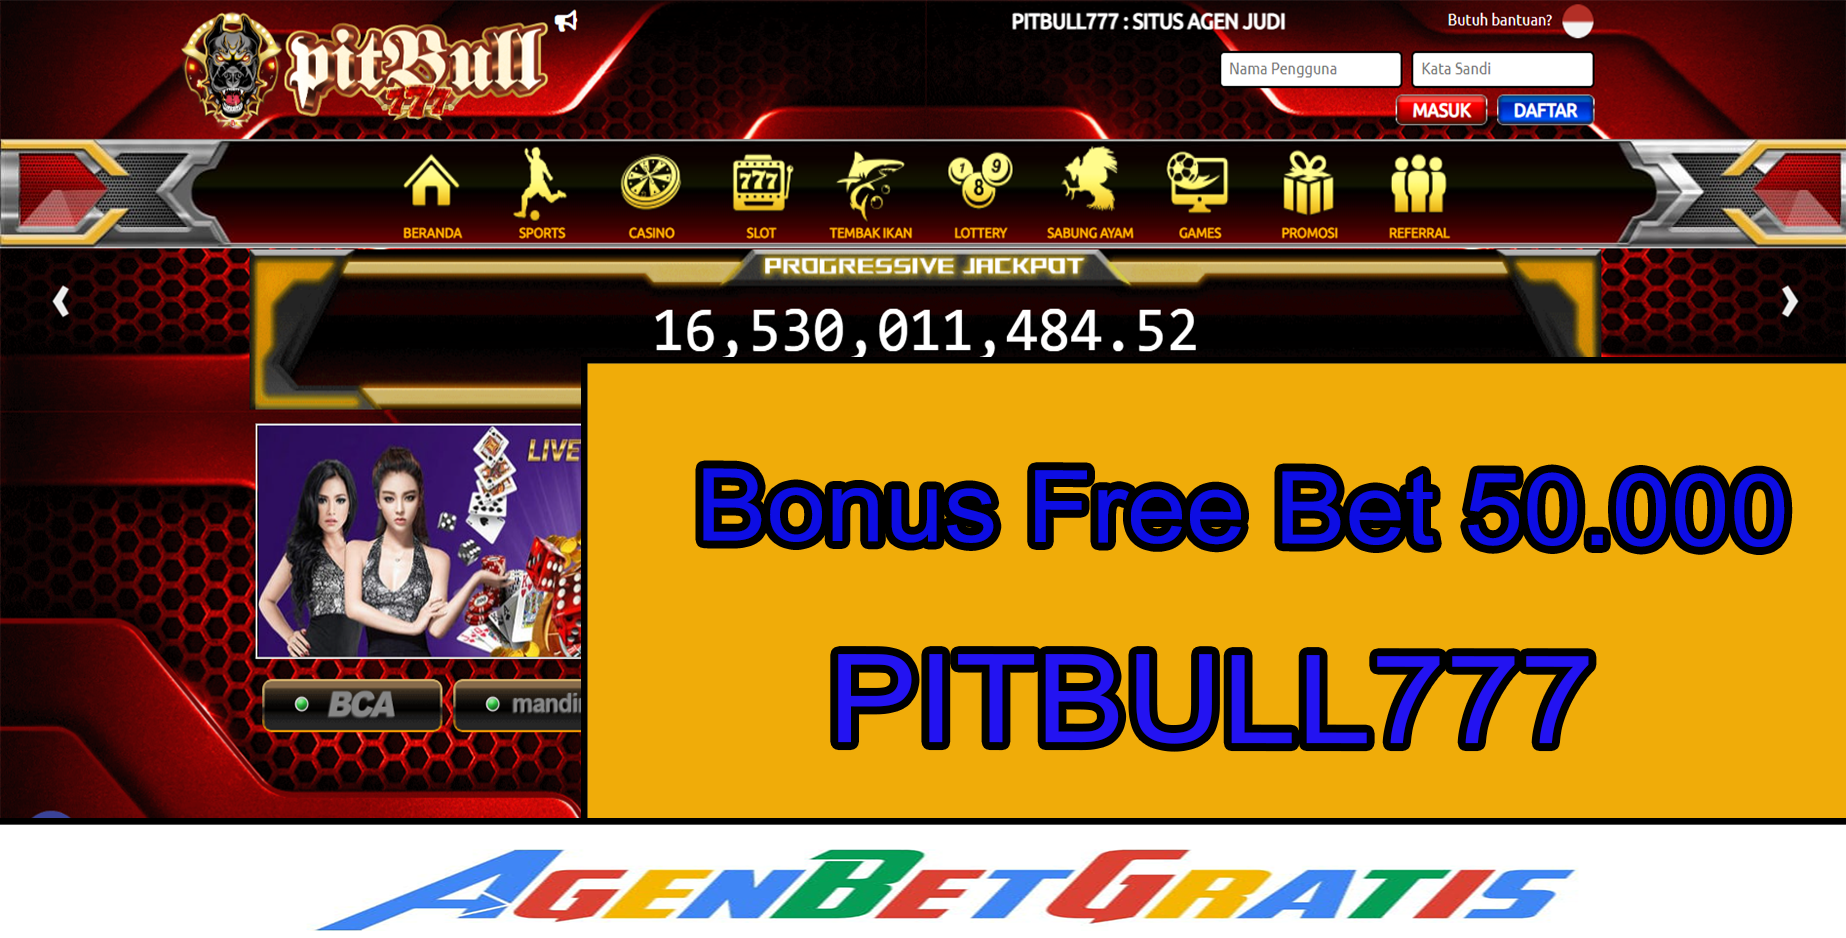 PITBULL777 - Bonus FreeBet 50.000